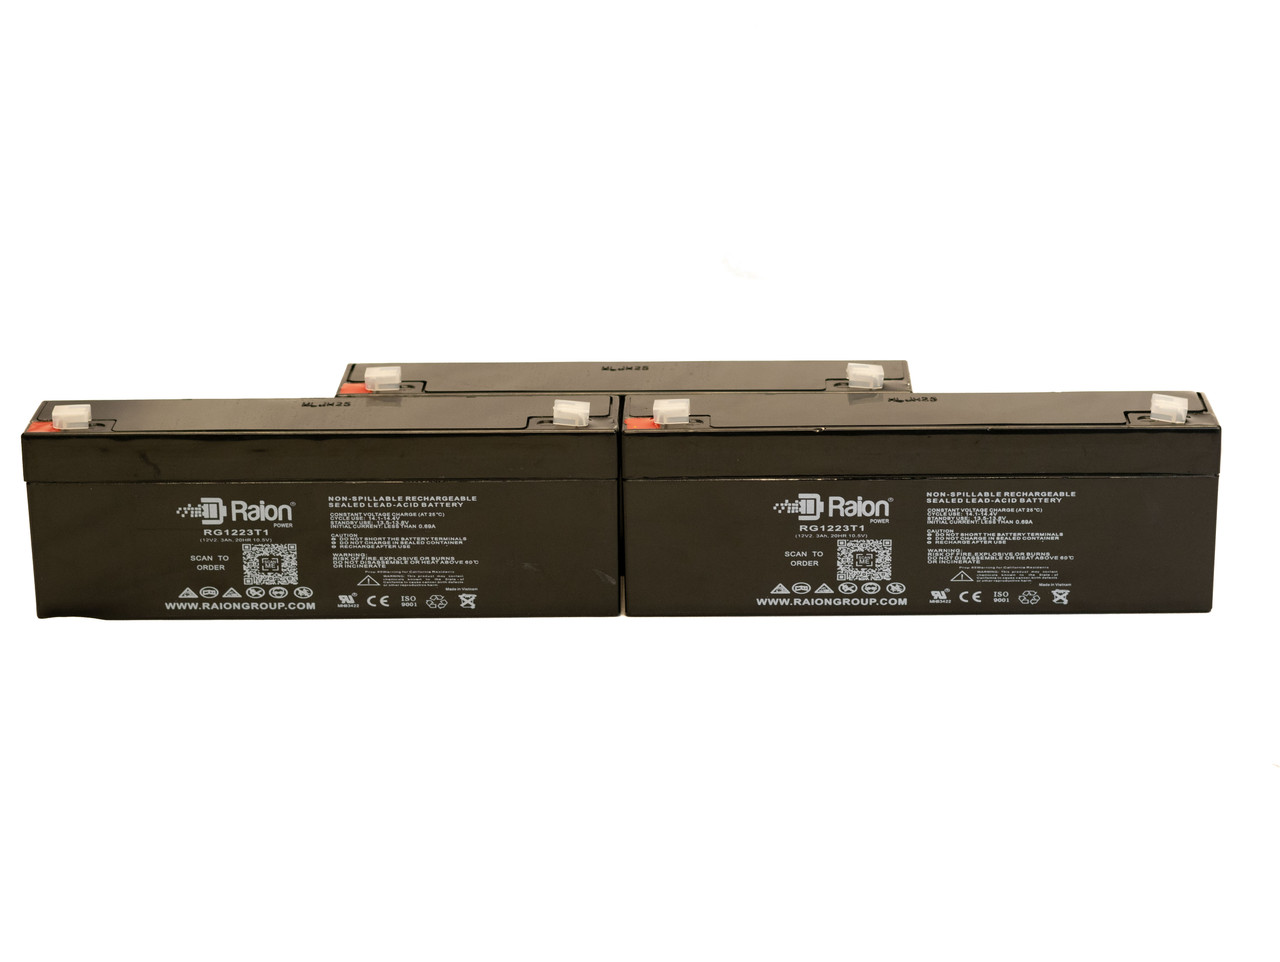 Raion Power 12V 2.3Ah RG1223T1 Replacement Medical Battery for Novametrix 500 Pulse Oximeter - 3 Pack